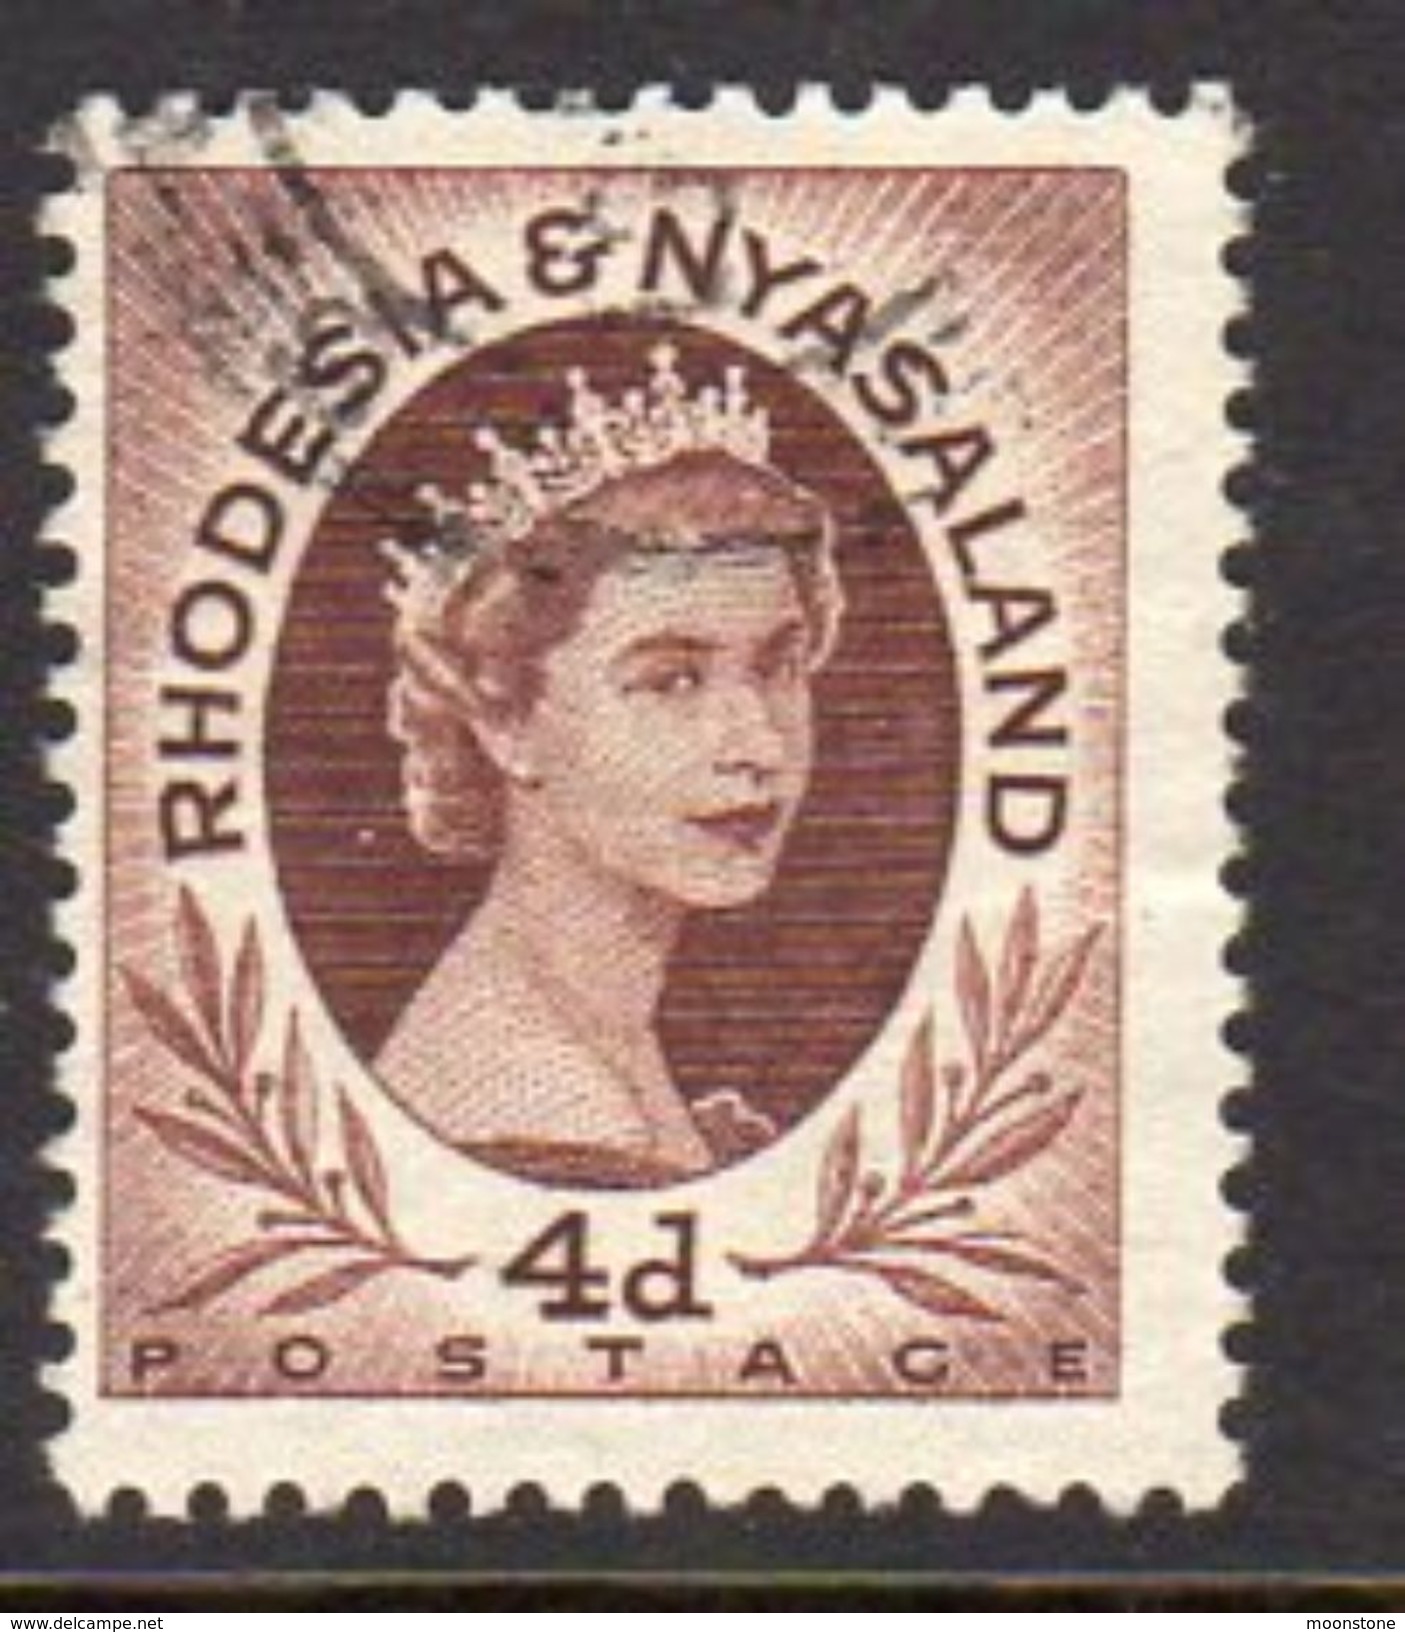 Rhodesia & Nyasaland 1954 4d Definitive, Used, SG 5 (BA) - Rhodesia & Nyasaland (1954-1963)